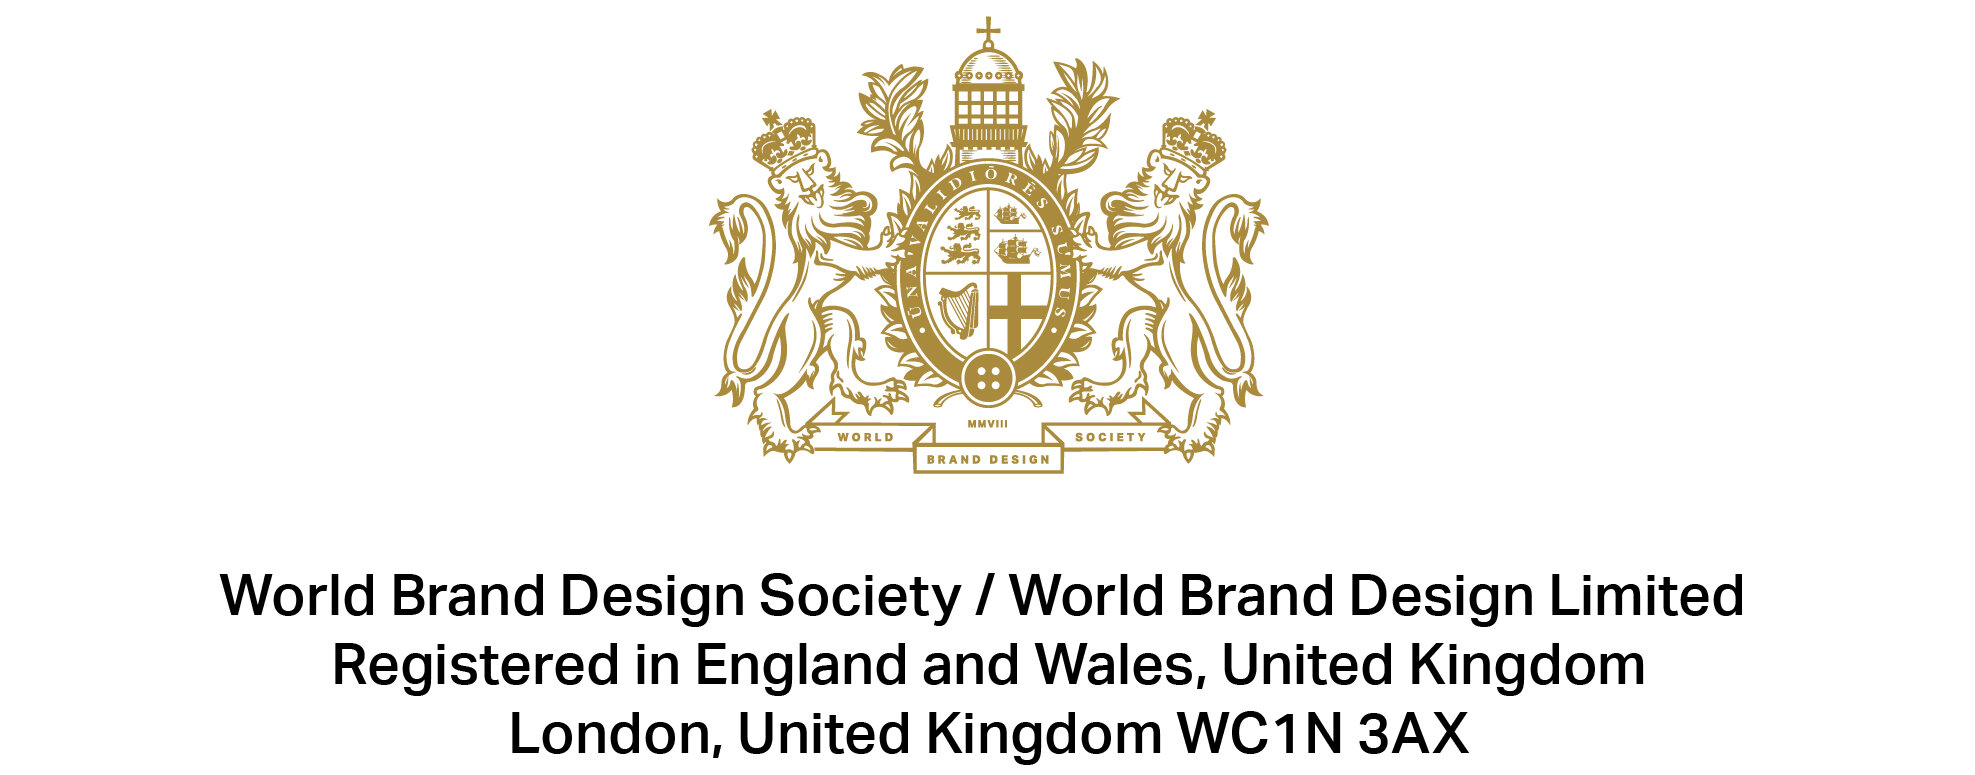 Pin on World Brand Design Society